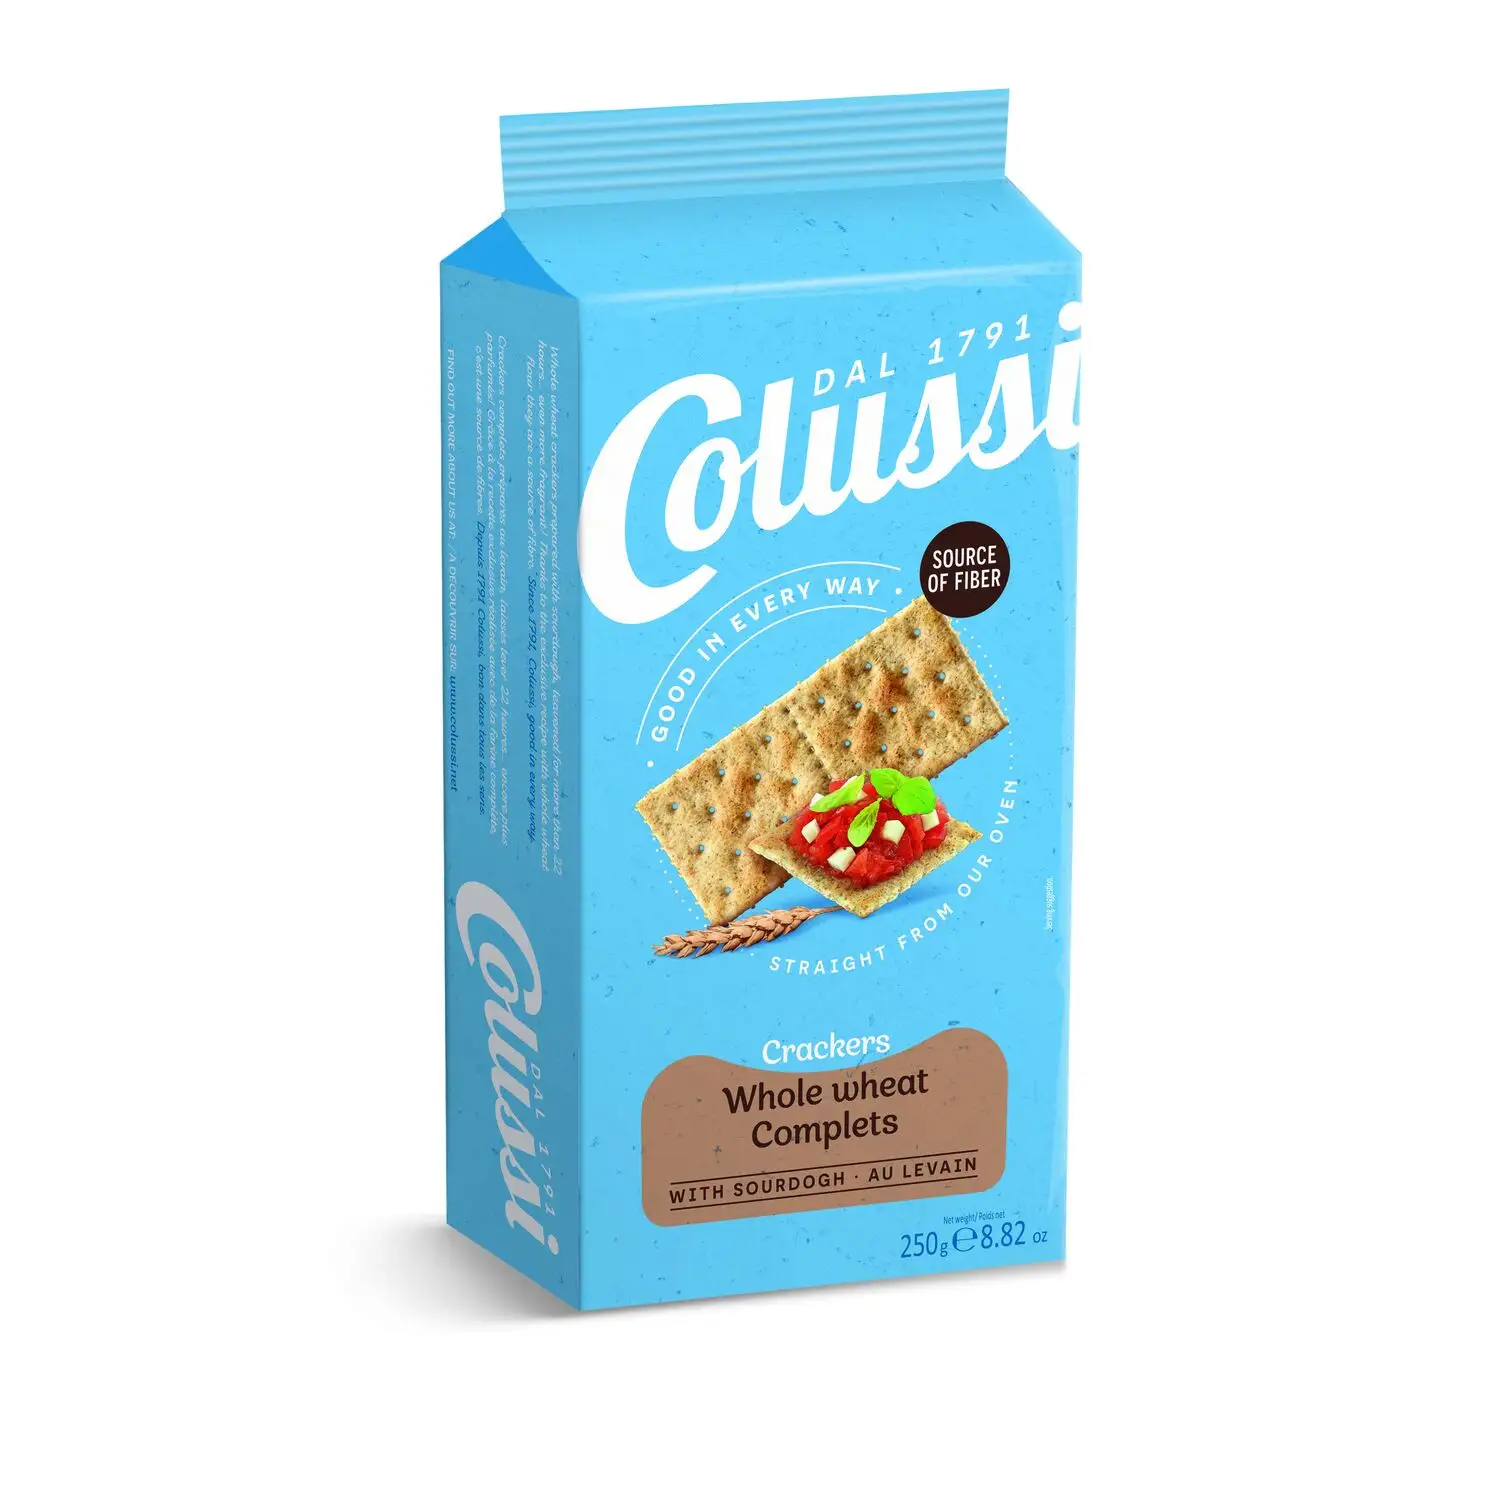 Whole some Nutritional Snack - COLUSSI Vollkorn cracker 250G x 20 Stück-Italiens feinste in jedem Biss